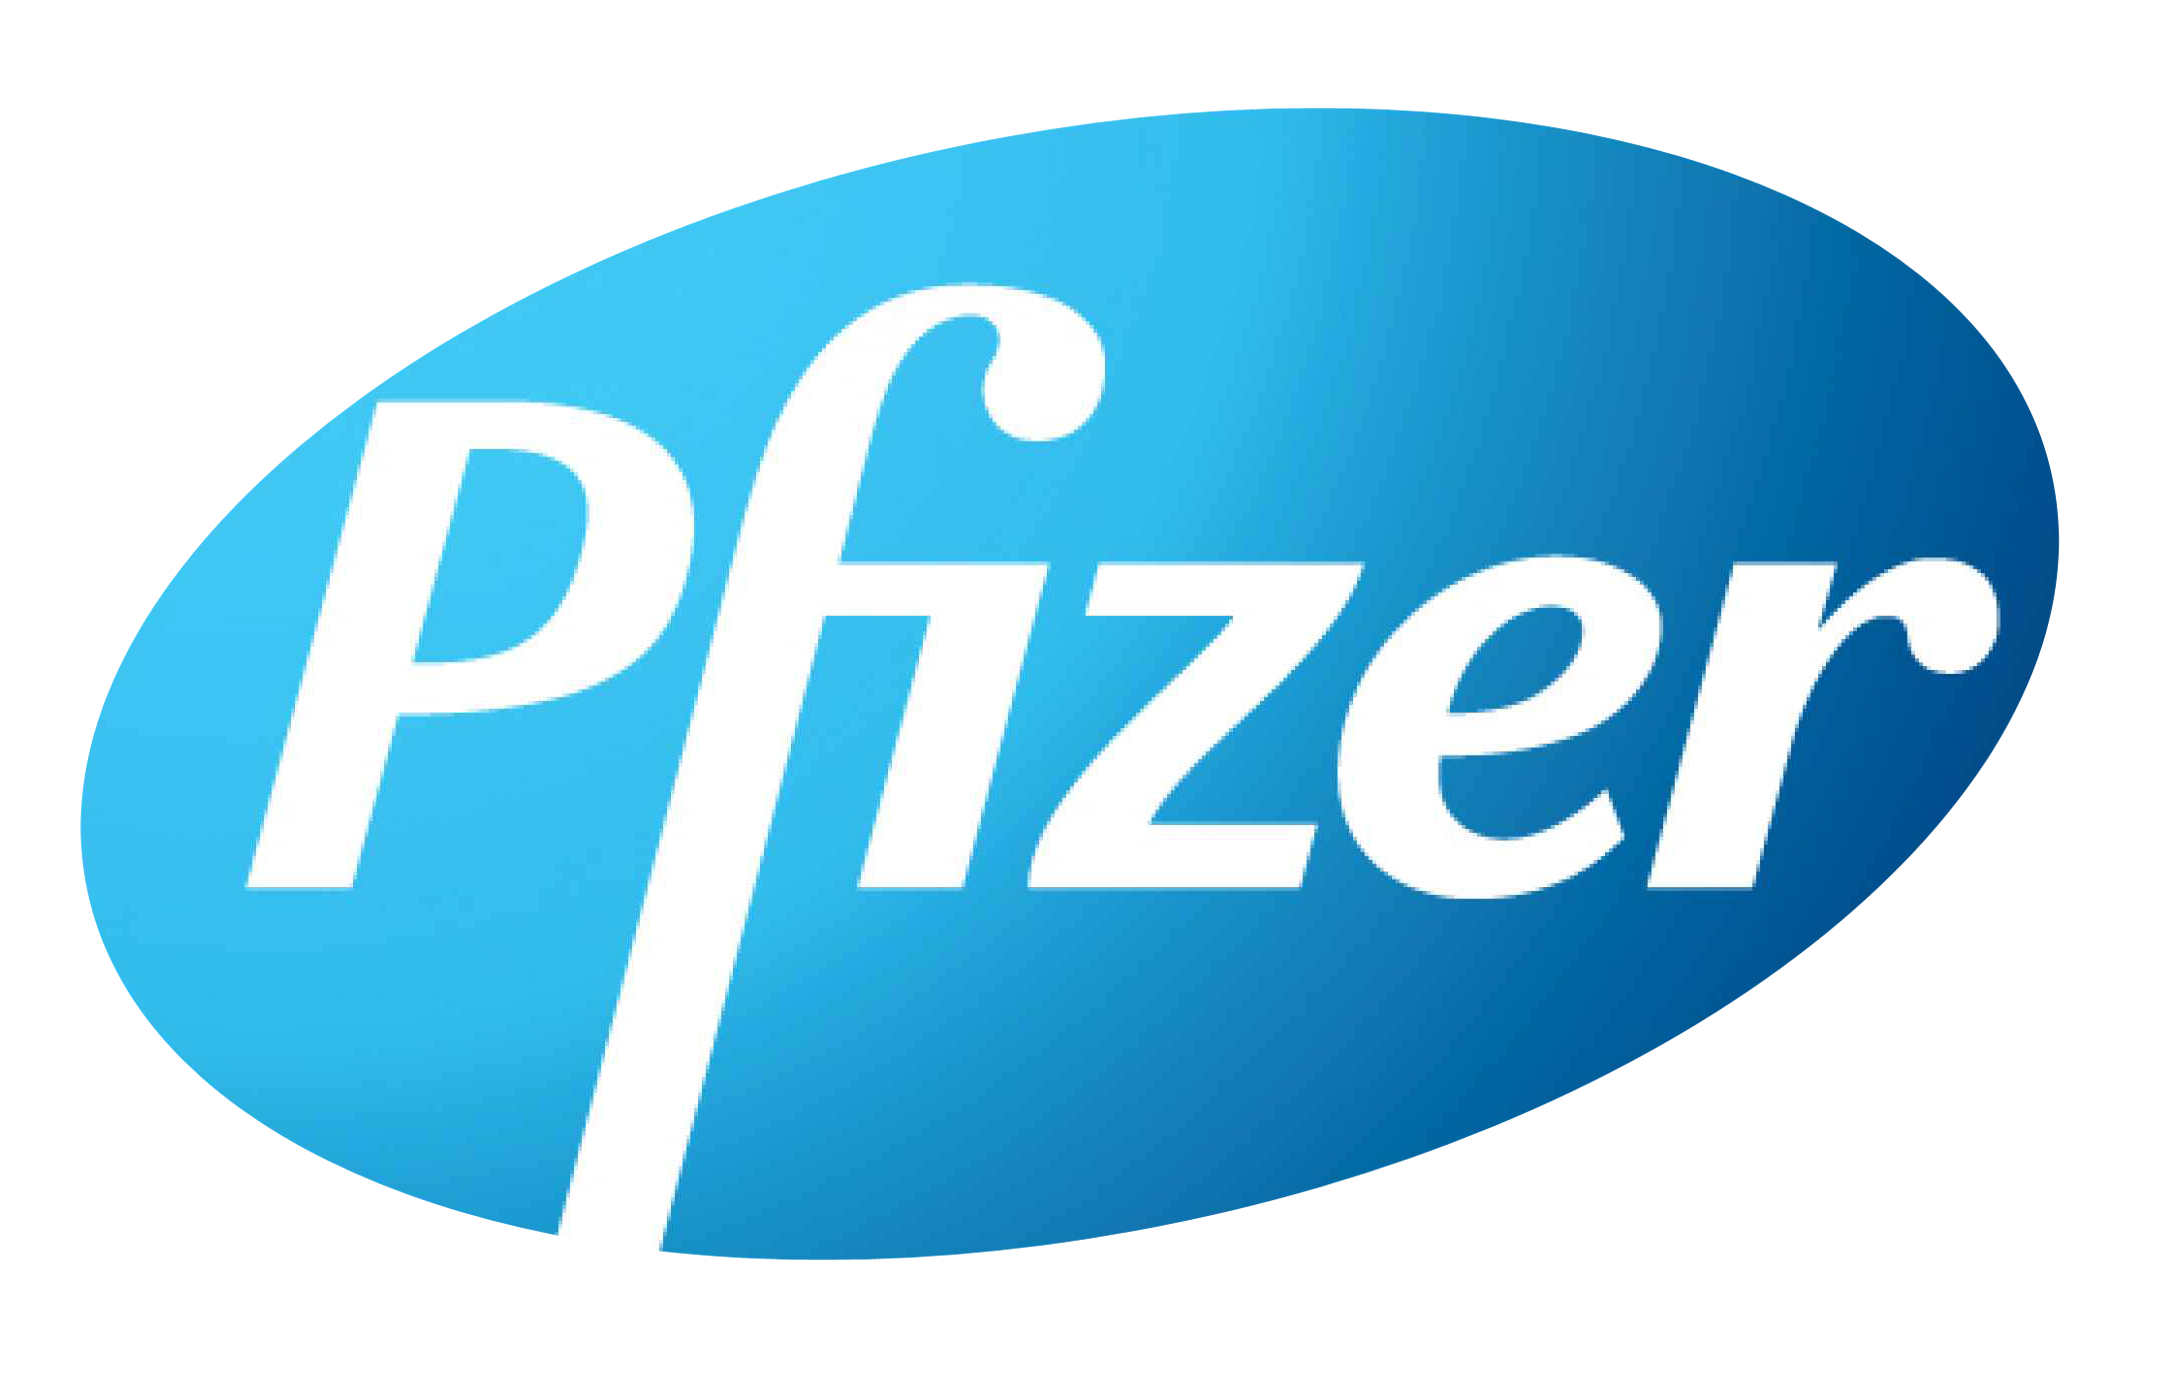 PNGPIX-COM-Pfizer-Logo-PNG-Transparent